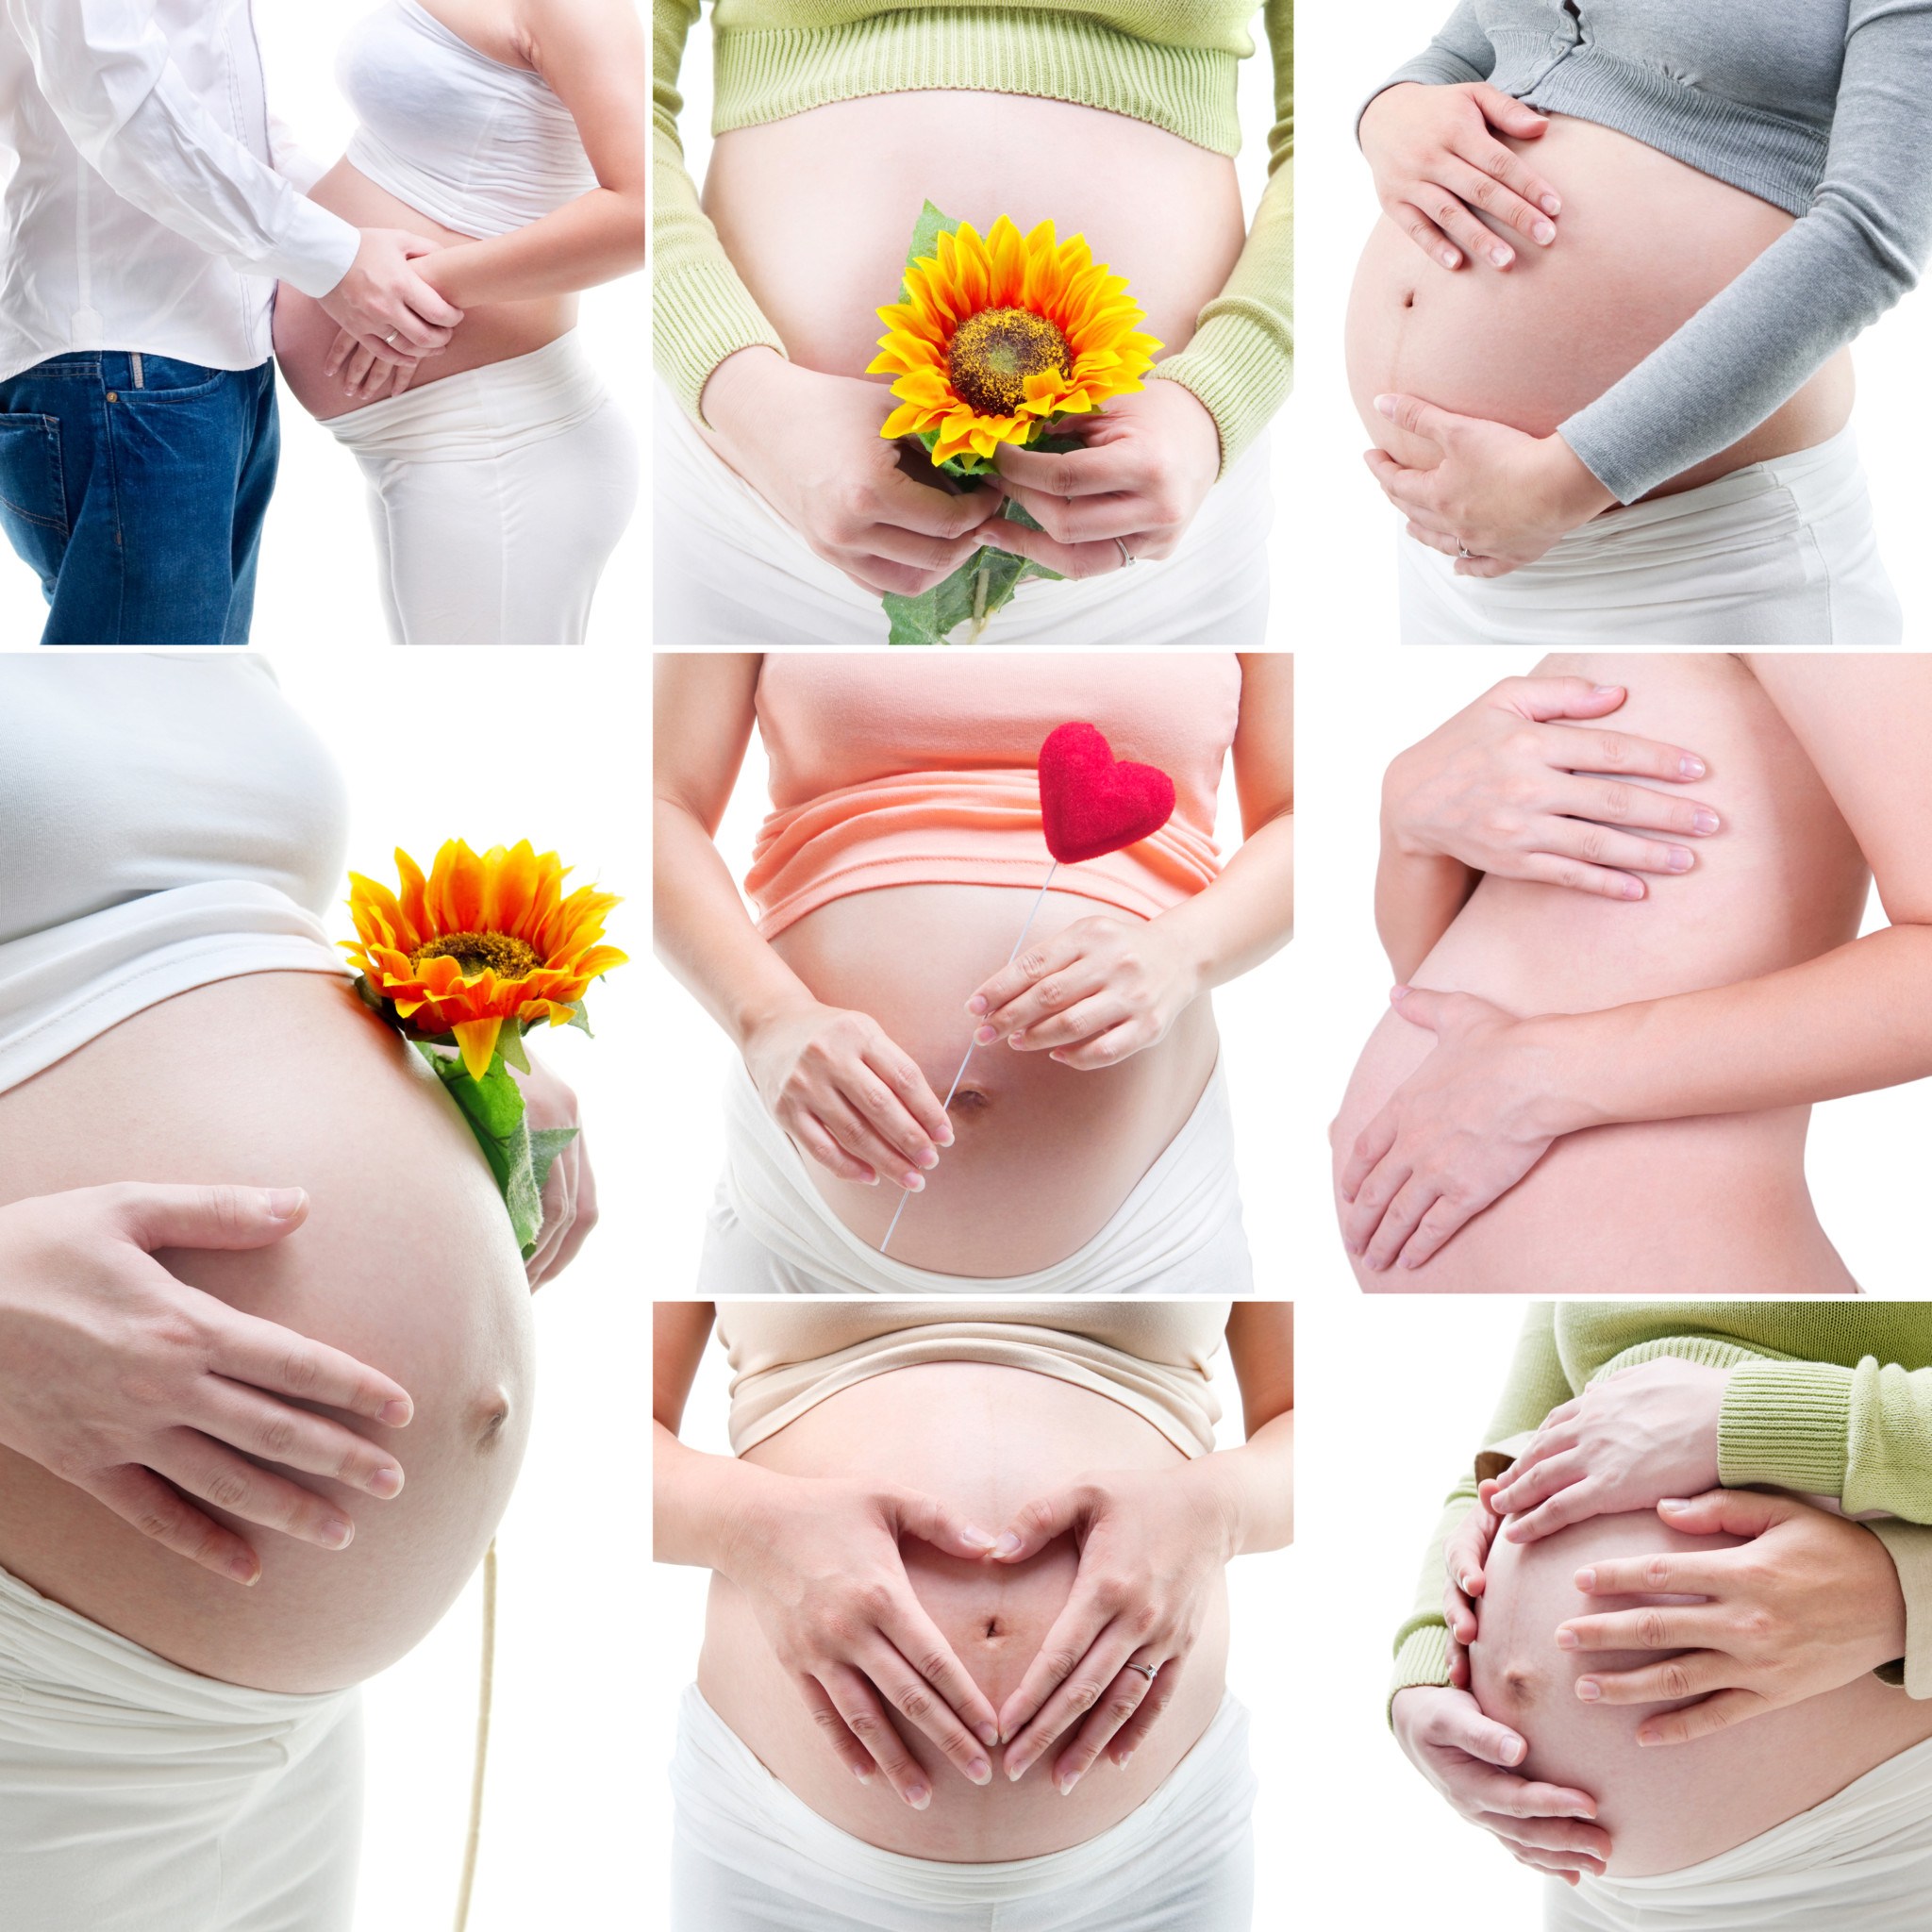 Pregnancy belly bump casting ideas